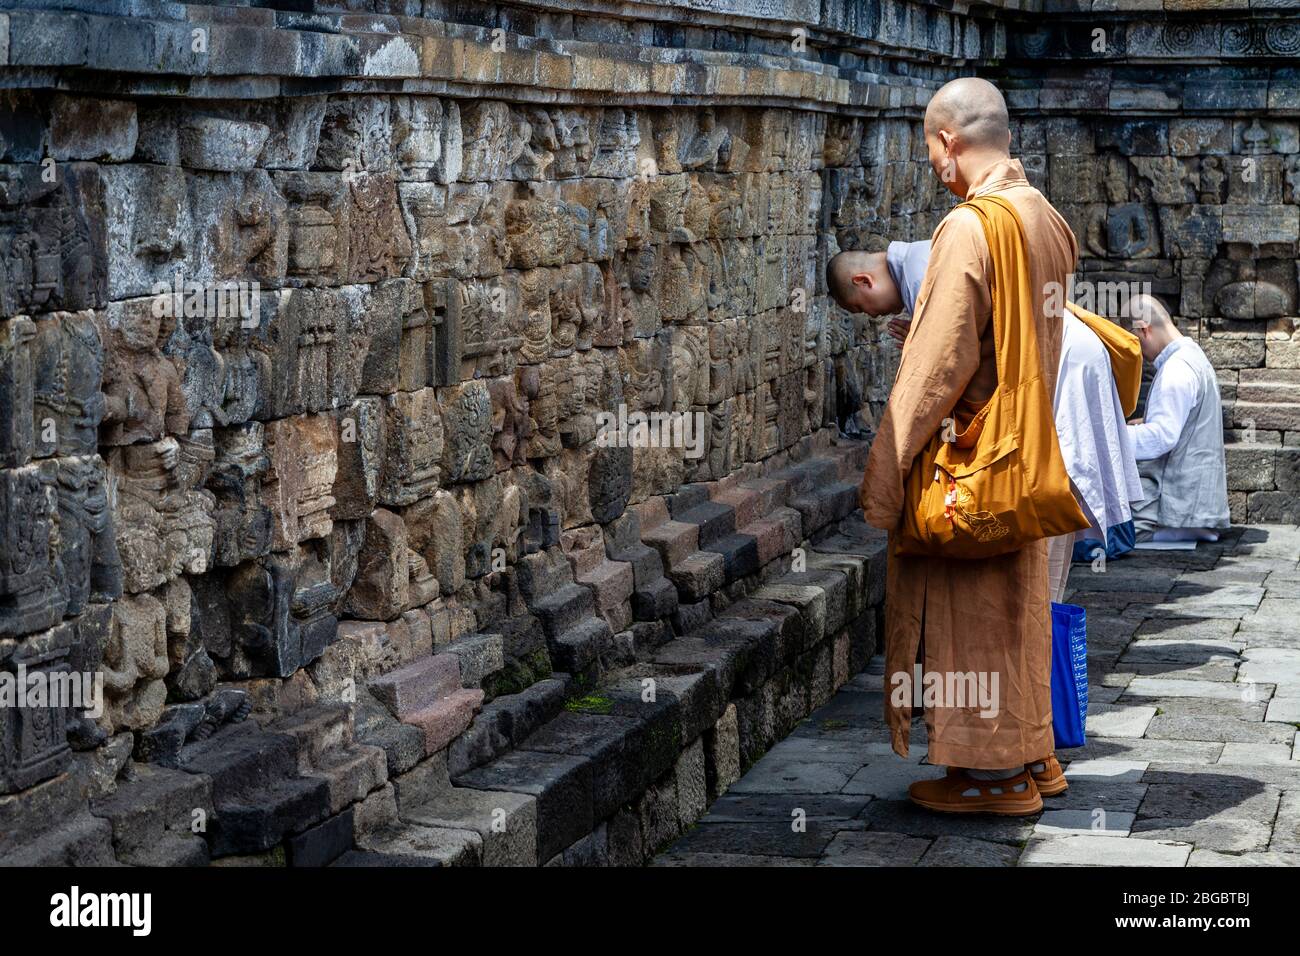 A Group Of Buddhist Monks Praying At Borobudur Temple, Yogyakarta, Central Java, Indonesia Stock Photo